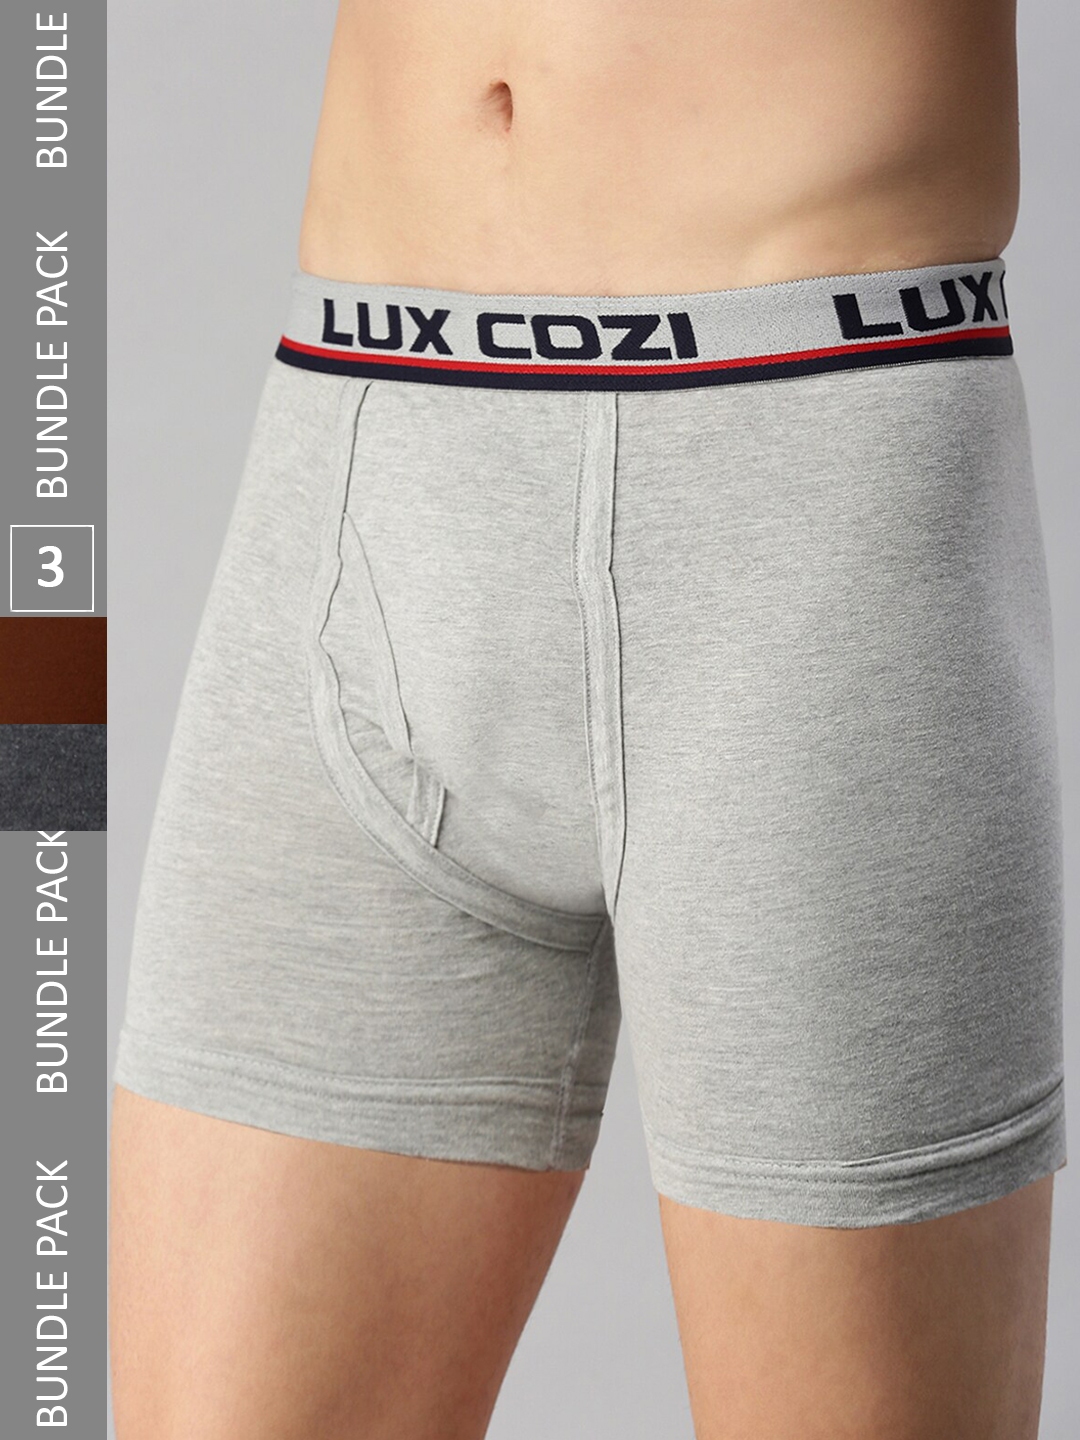 Buy LUX COZI Solid Cotton Blend Regular Fit Men's Briefs - Pack of